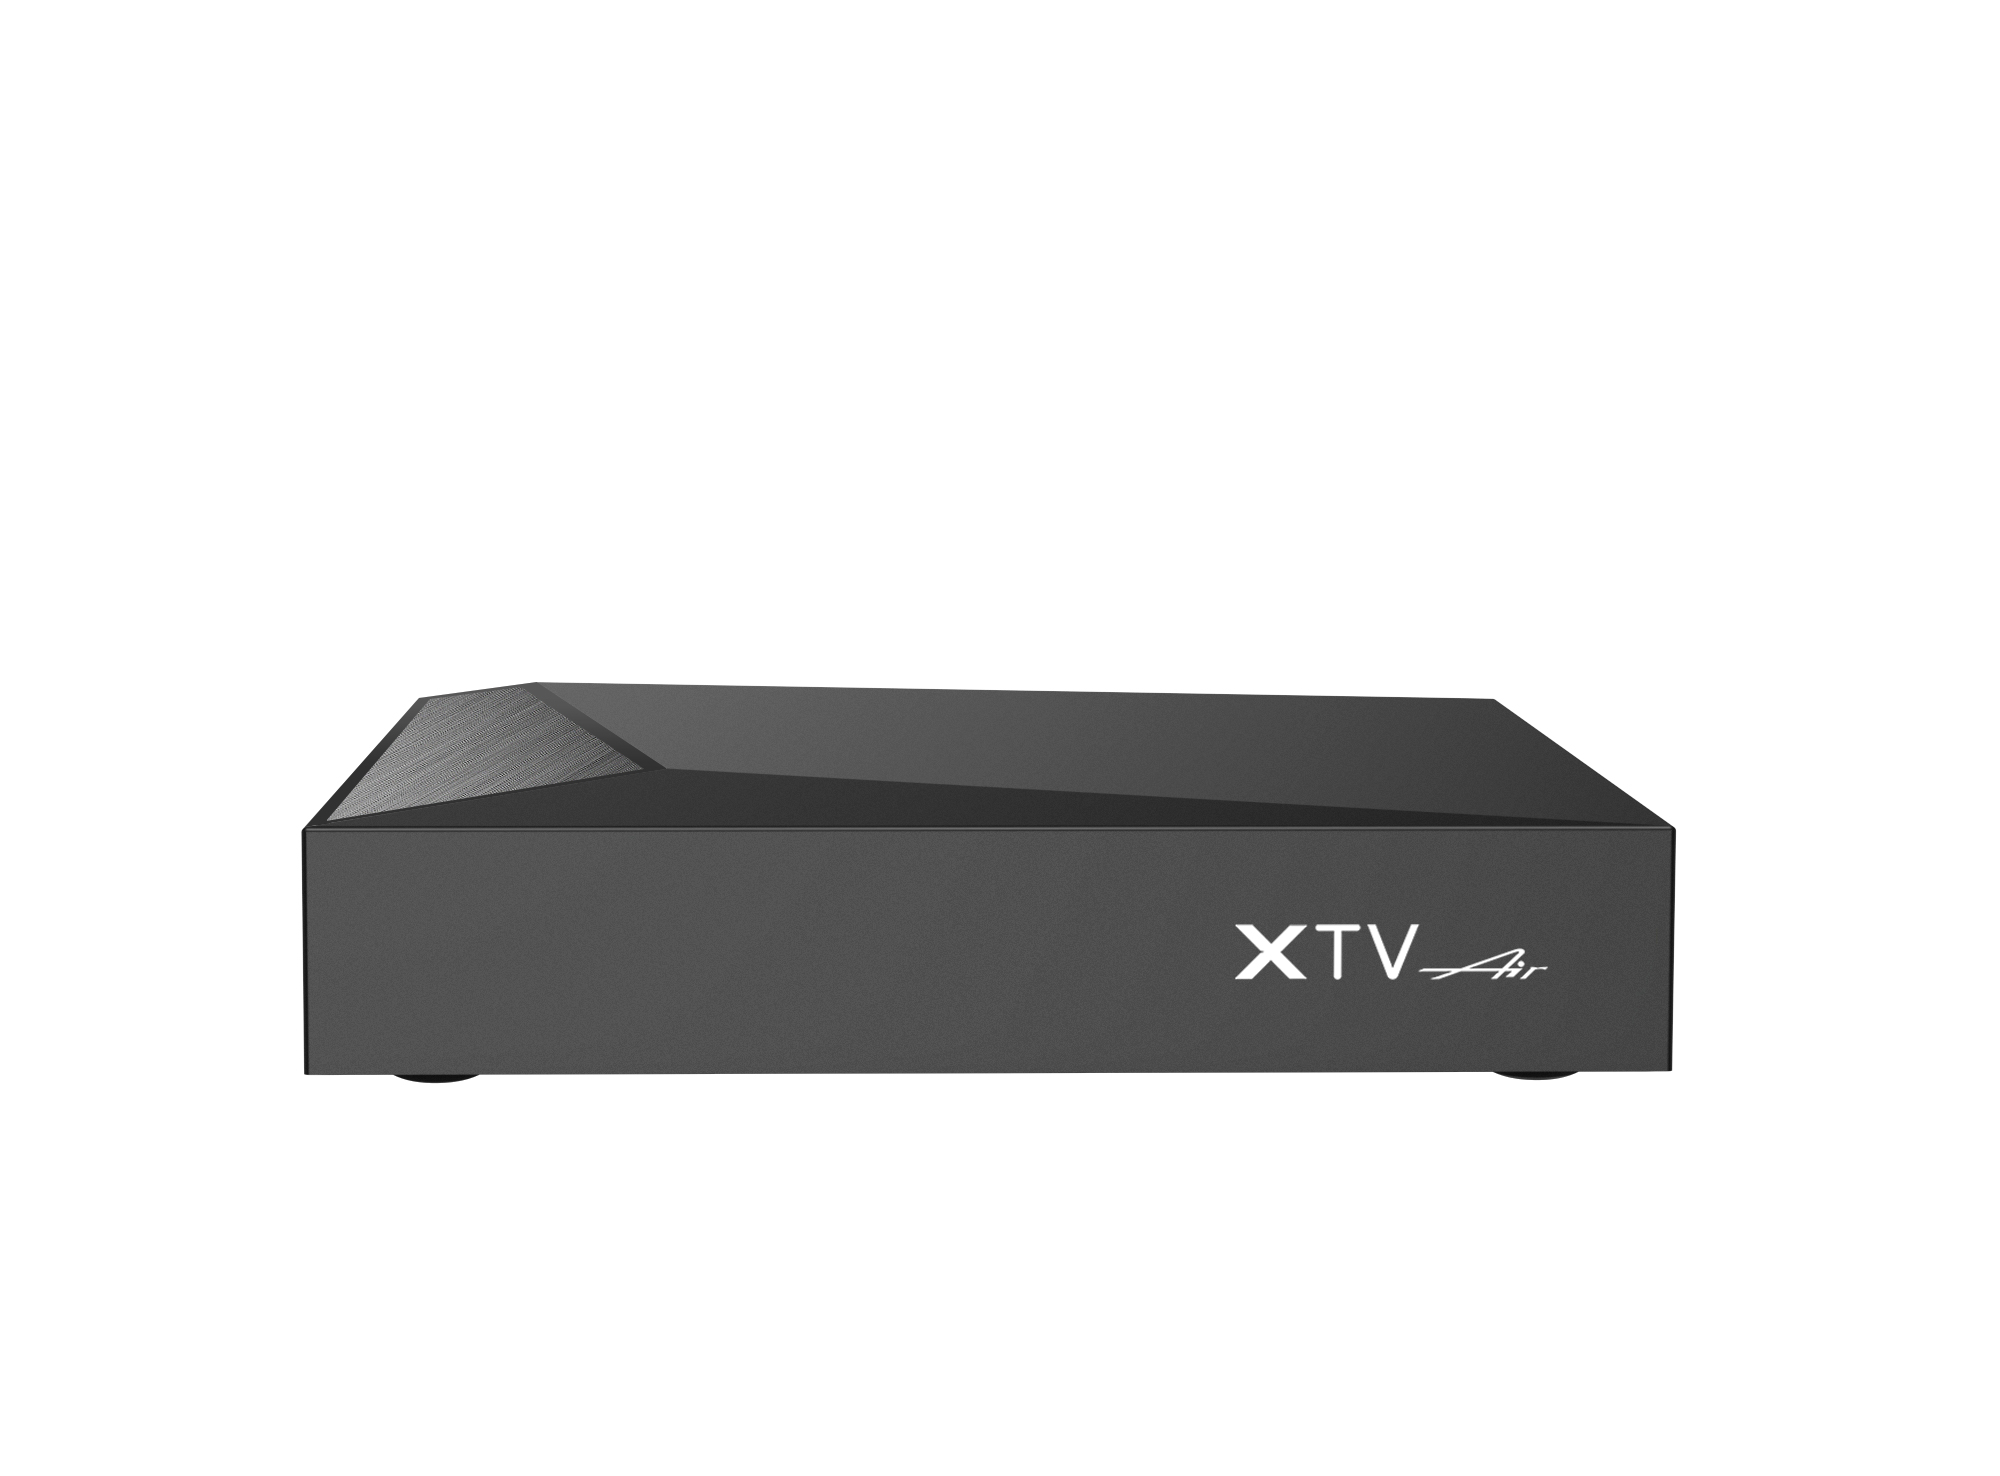 Gratis test 4K XTV Air TV Box Android BT Remote Control 2.4G/5G Set Top Box OTT